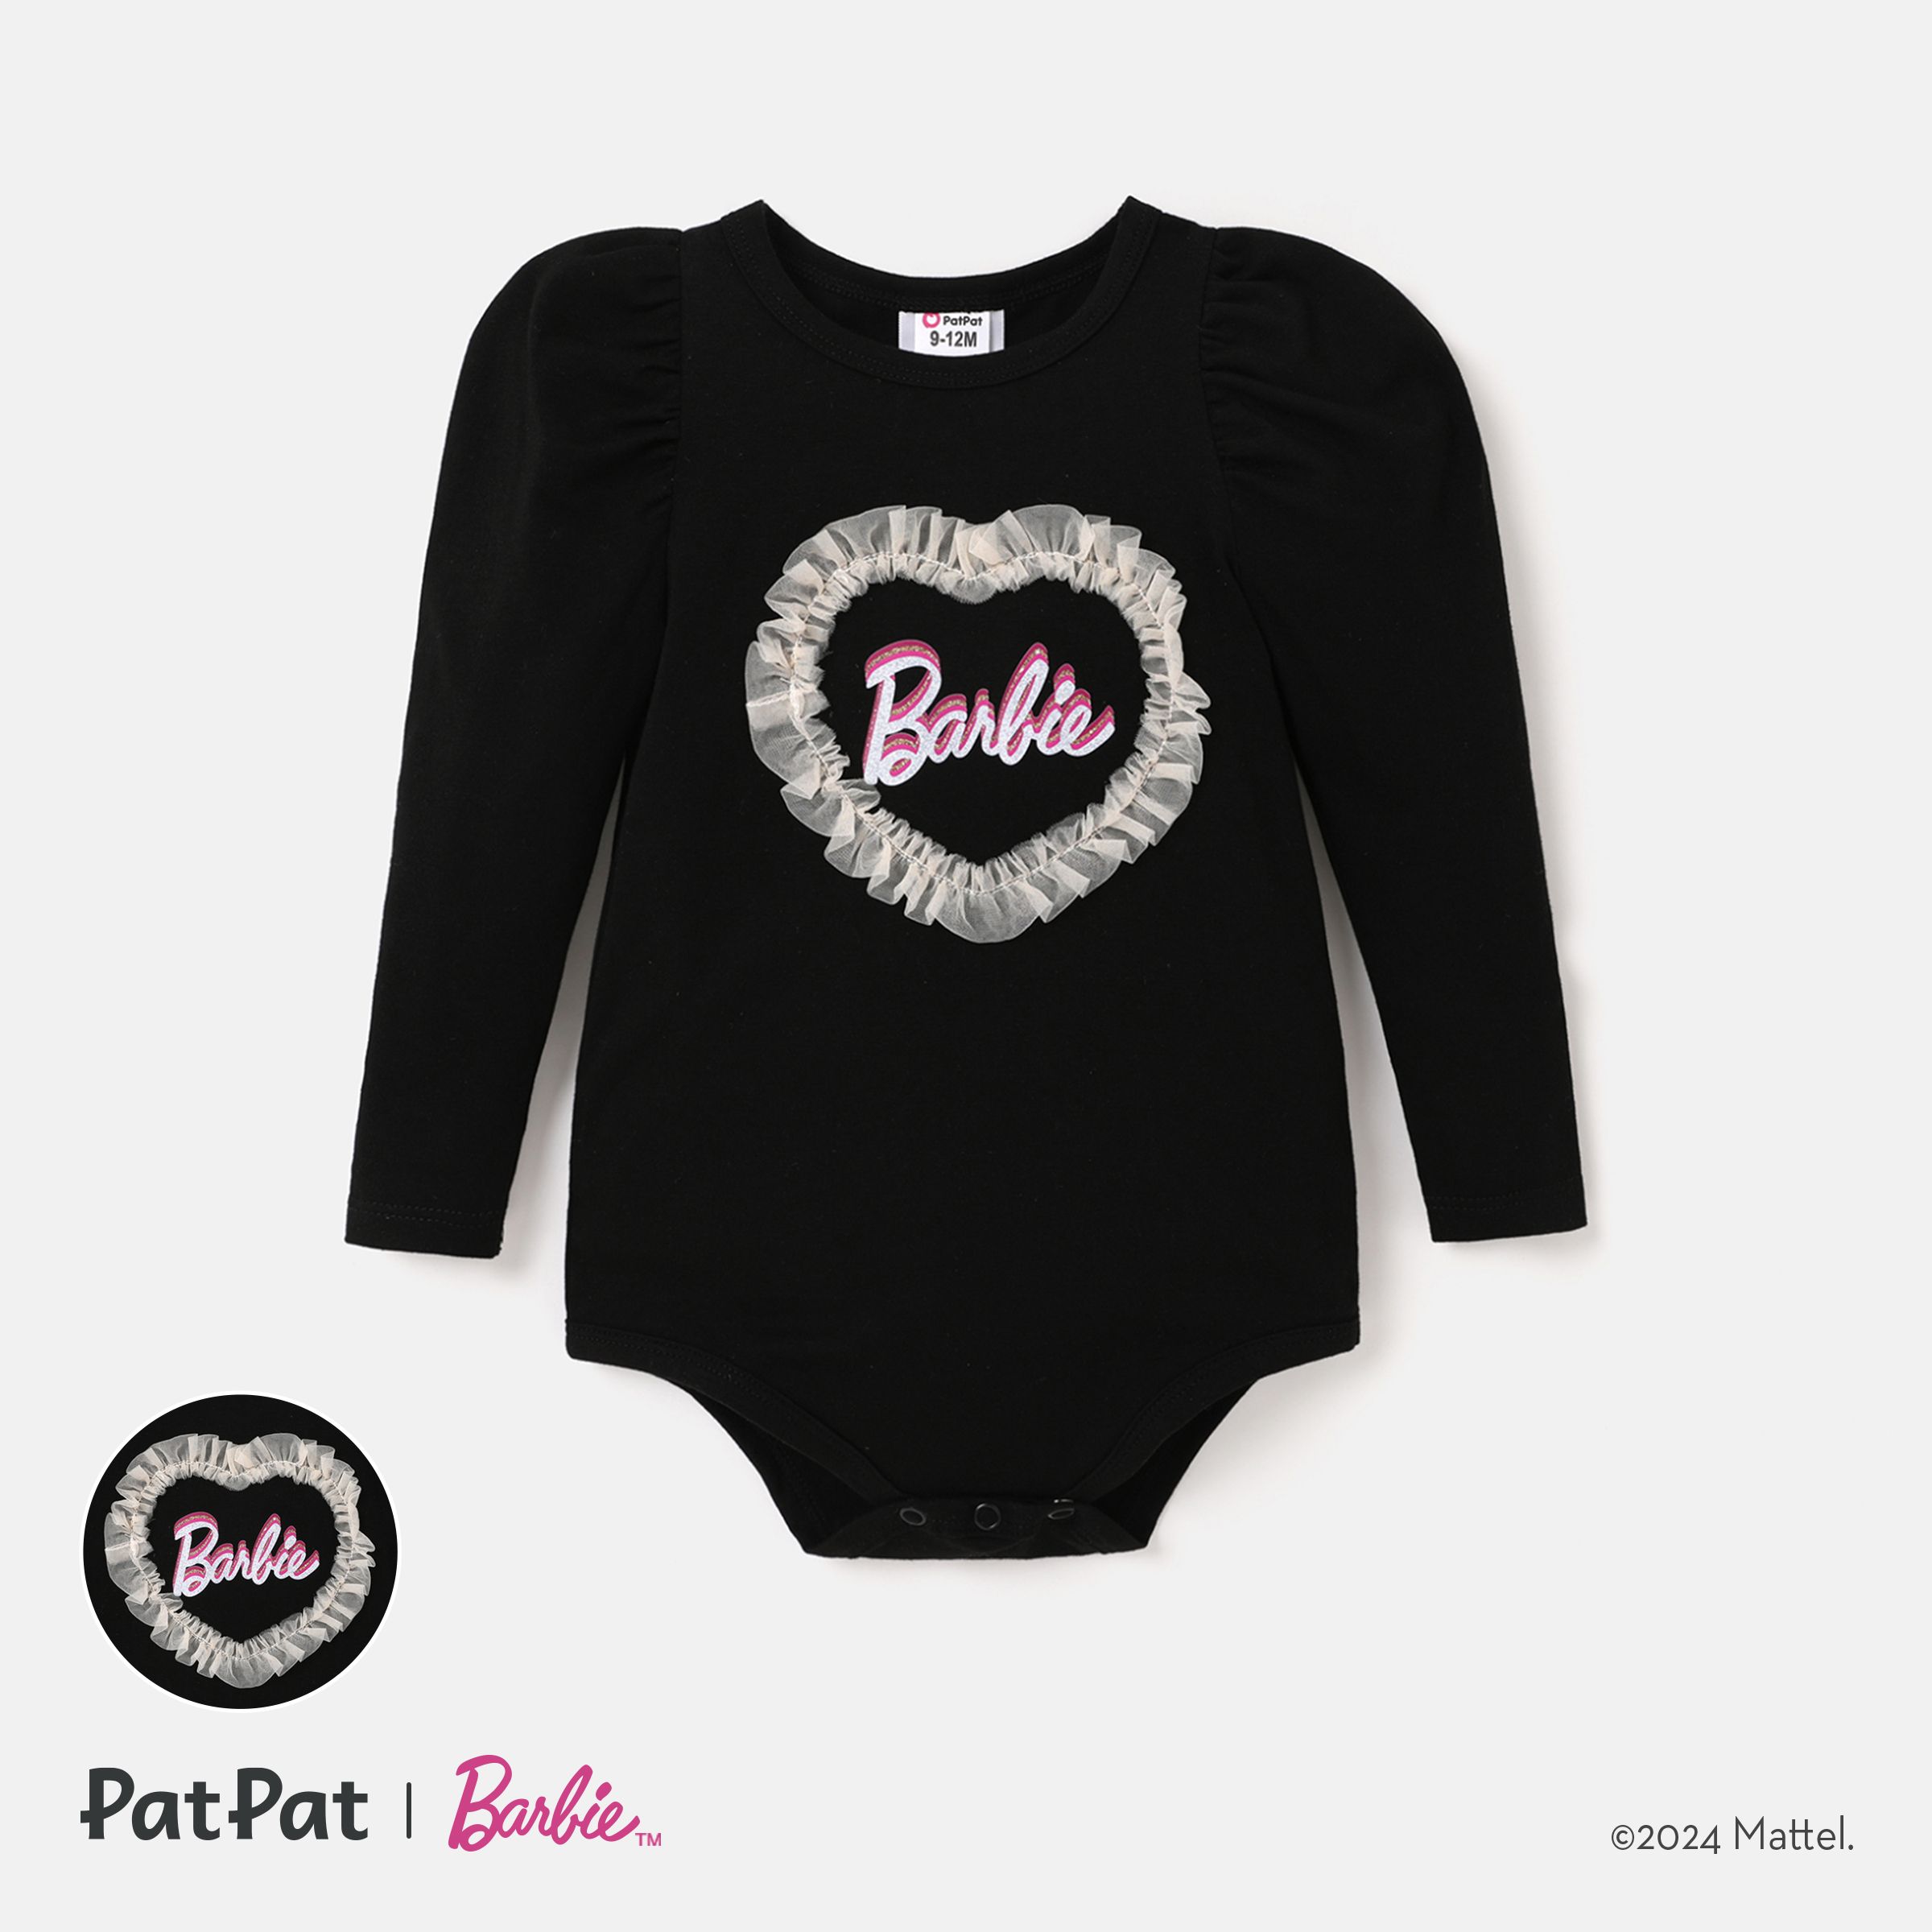 Barbie Mesh Heart Decor Houndstooth Panel Sibling Matching Gigot Sleeve Dresses With Belt Bag